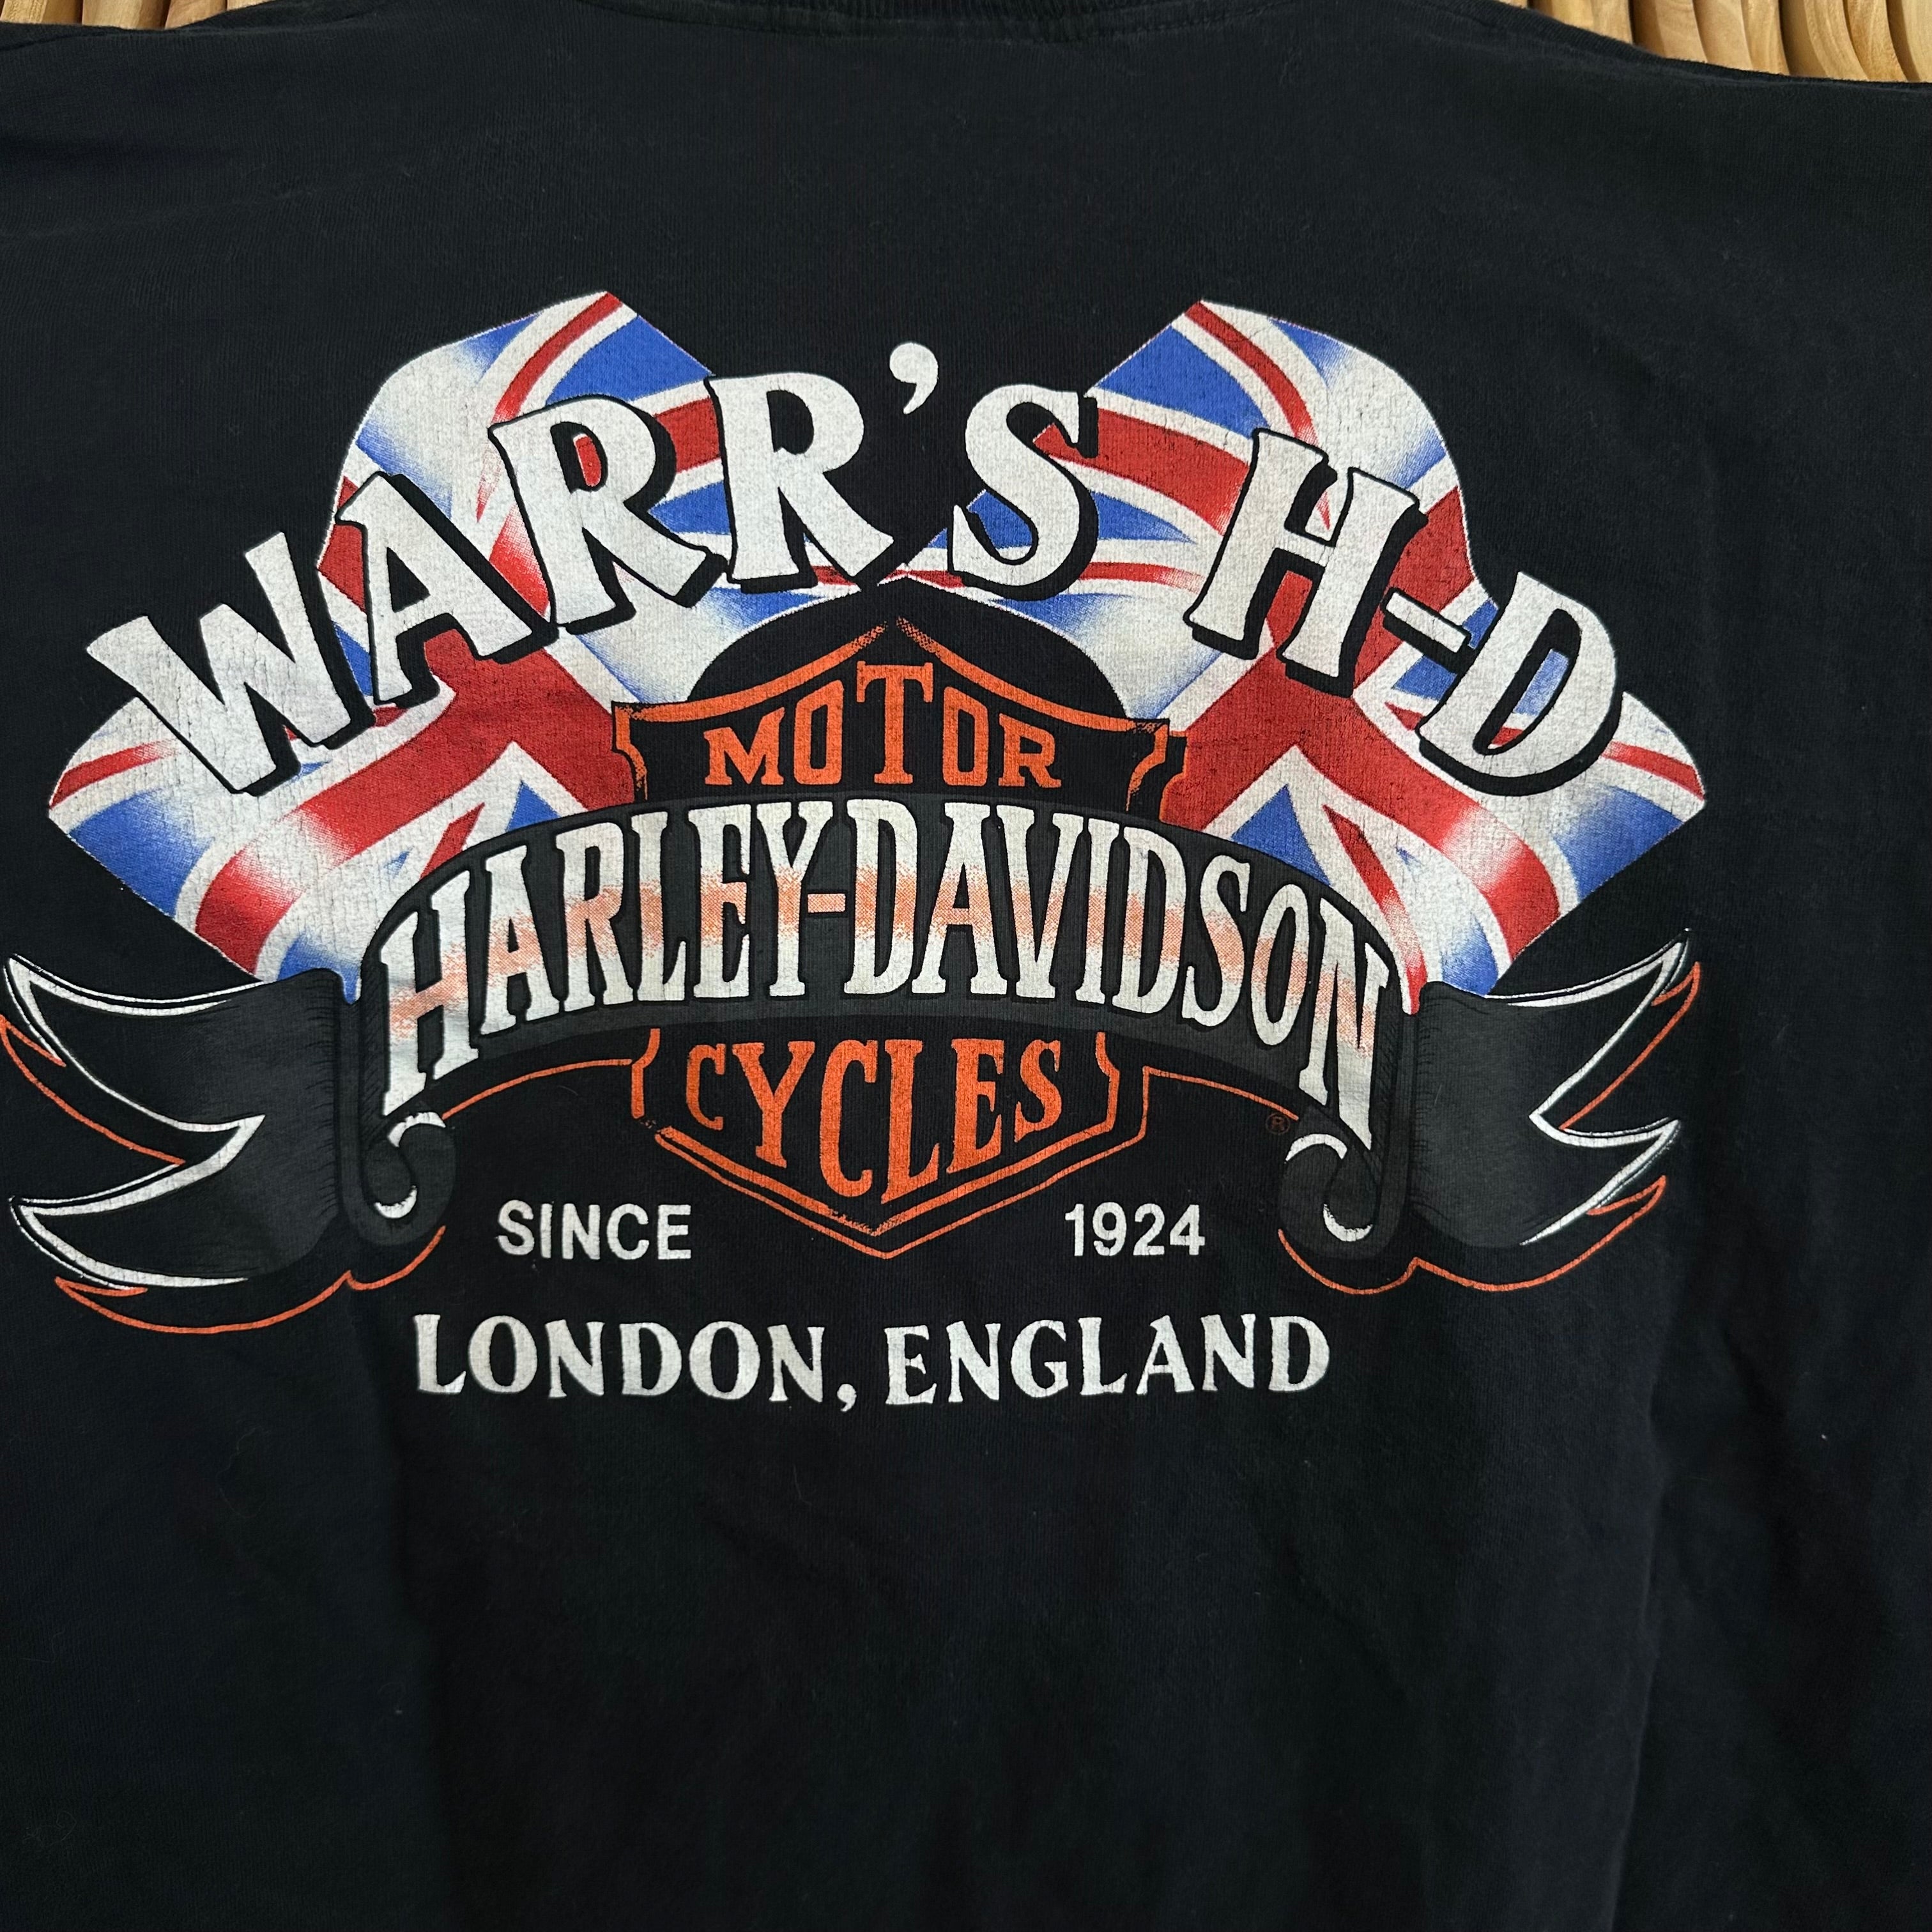 Harley Davidson One World One Motorcycle London, England T-Shirt